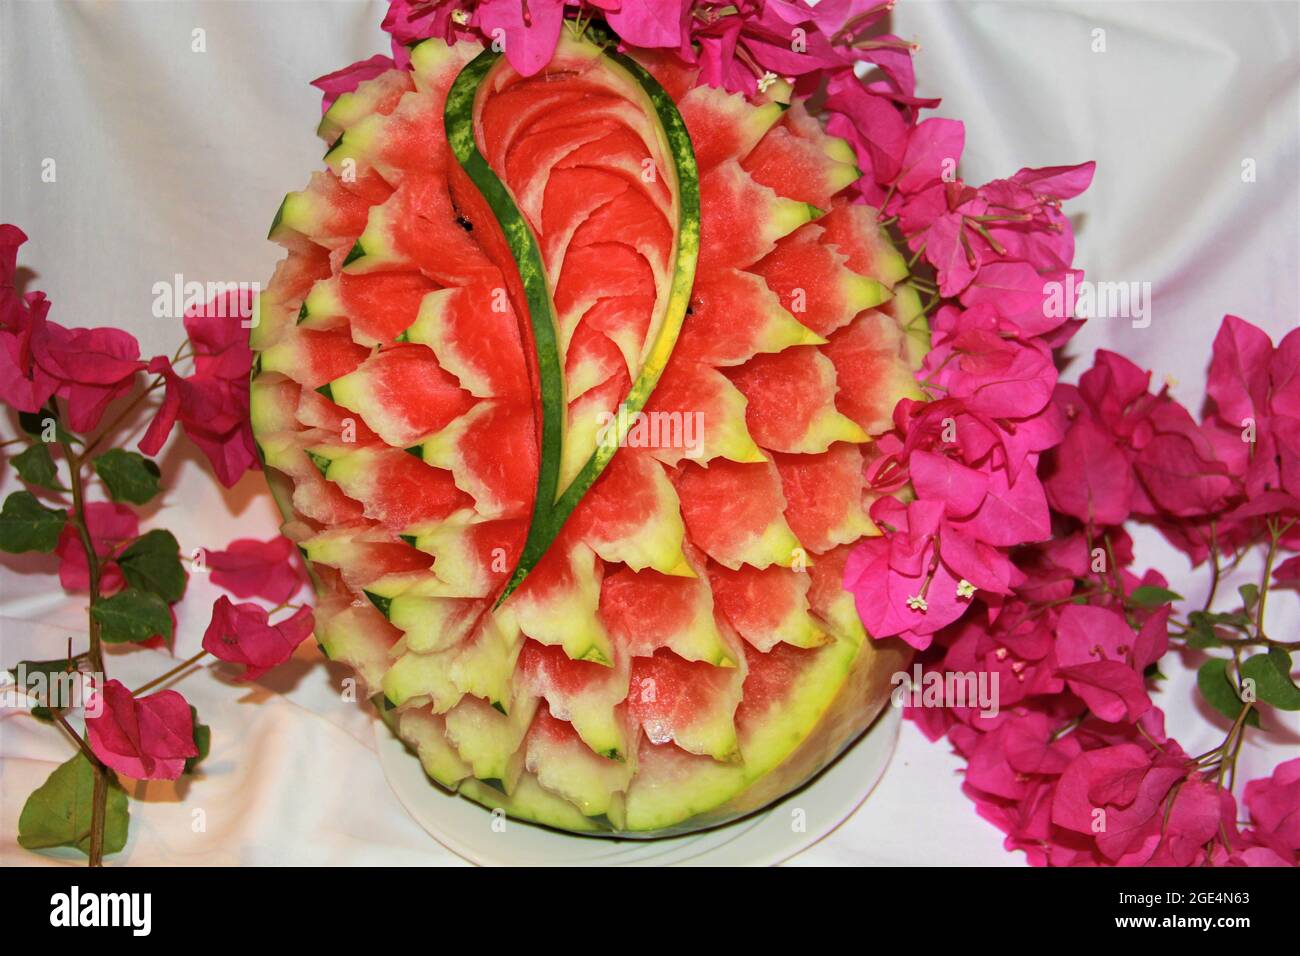 Beautiful Carving Art Work/Watermelon/Flower Decoration Stock Photo